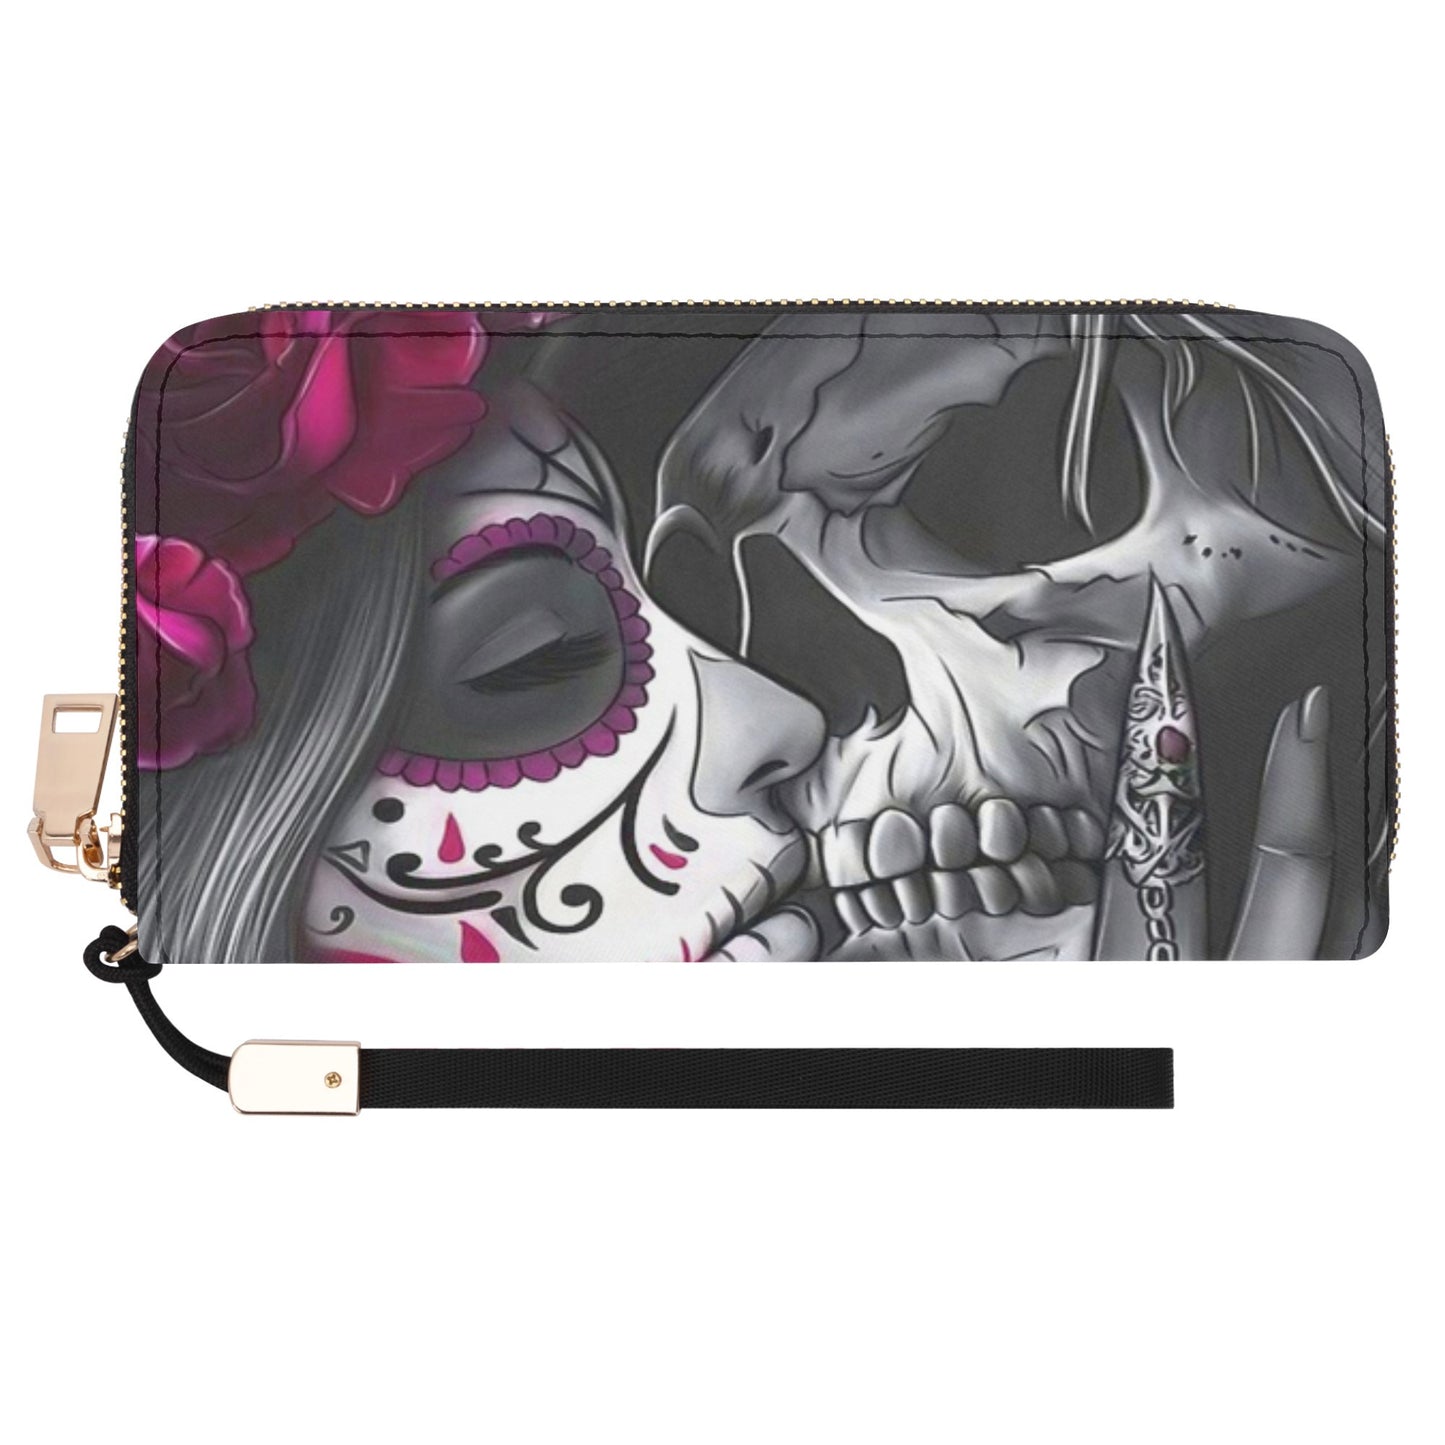 Mexican skull purse, calaveras skull cosmetic bag, mexican skull crossbody bag and wallet